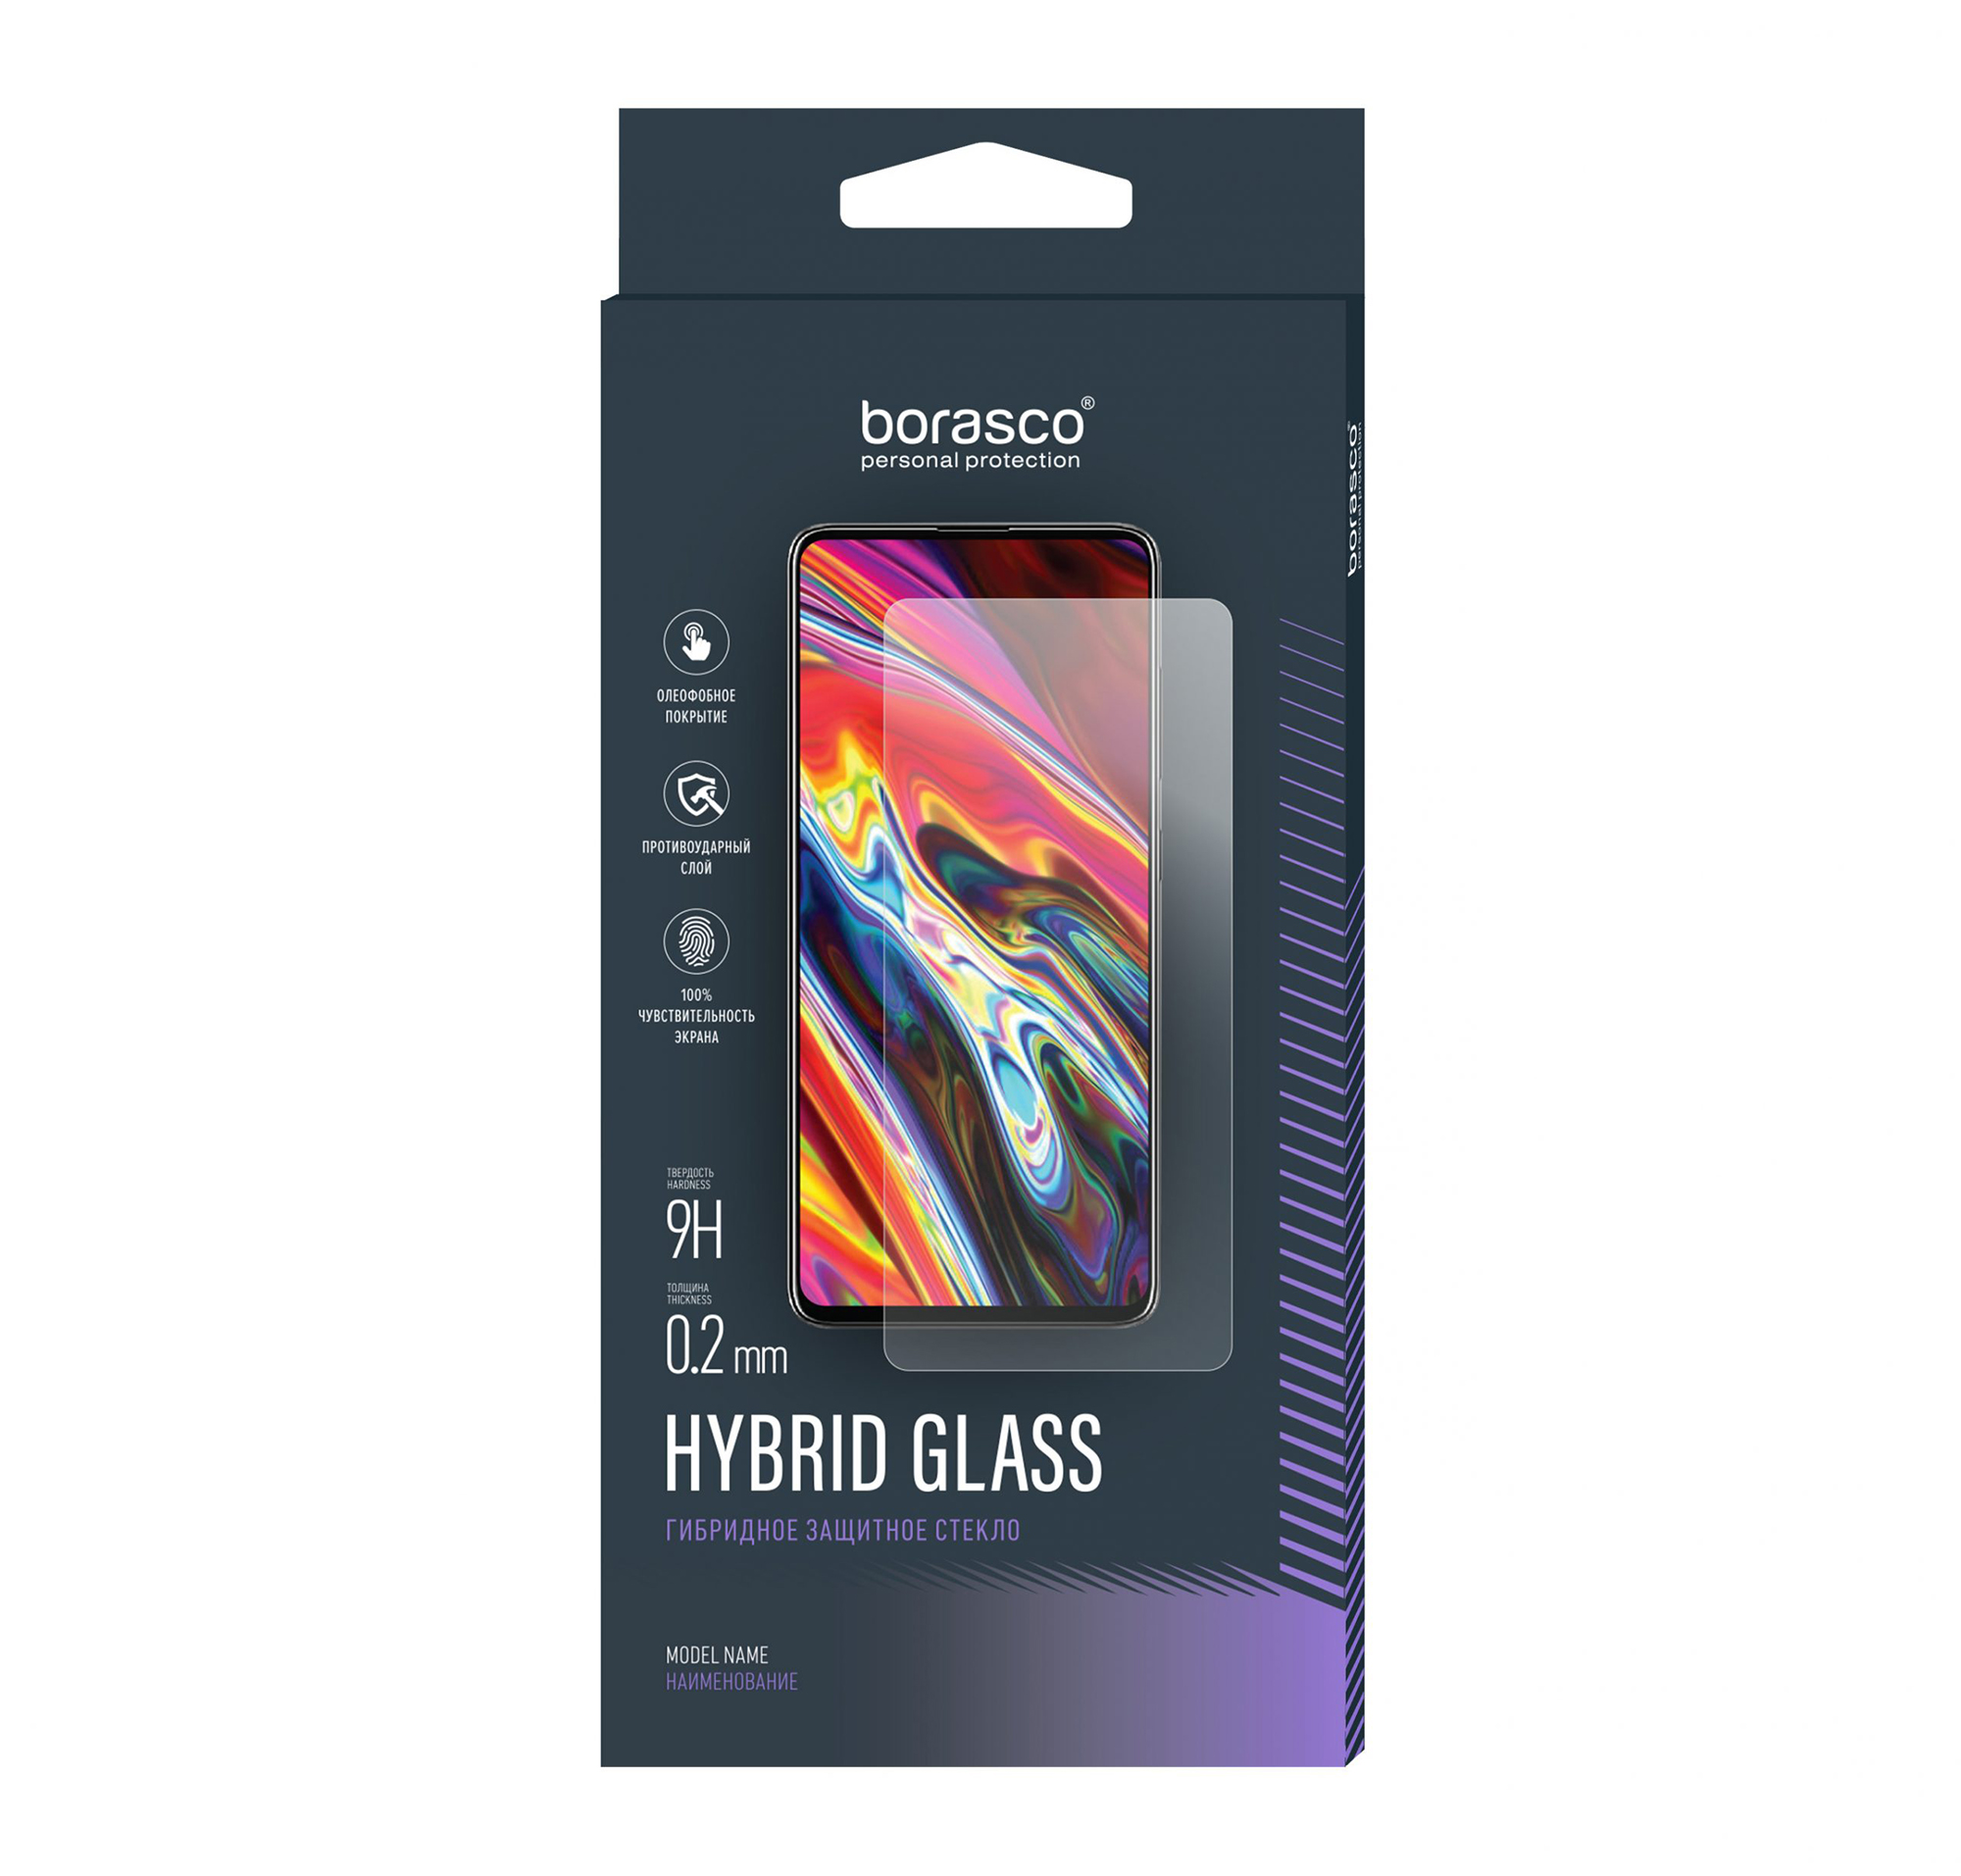 Защитное стекло Hybrid Glass для ZTE Blade A7s (2020) защитное стекло для камеры hybrid glass для zte blade a7 2020